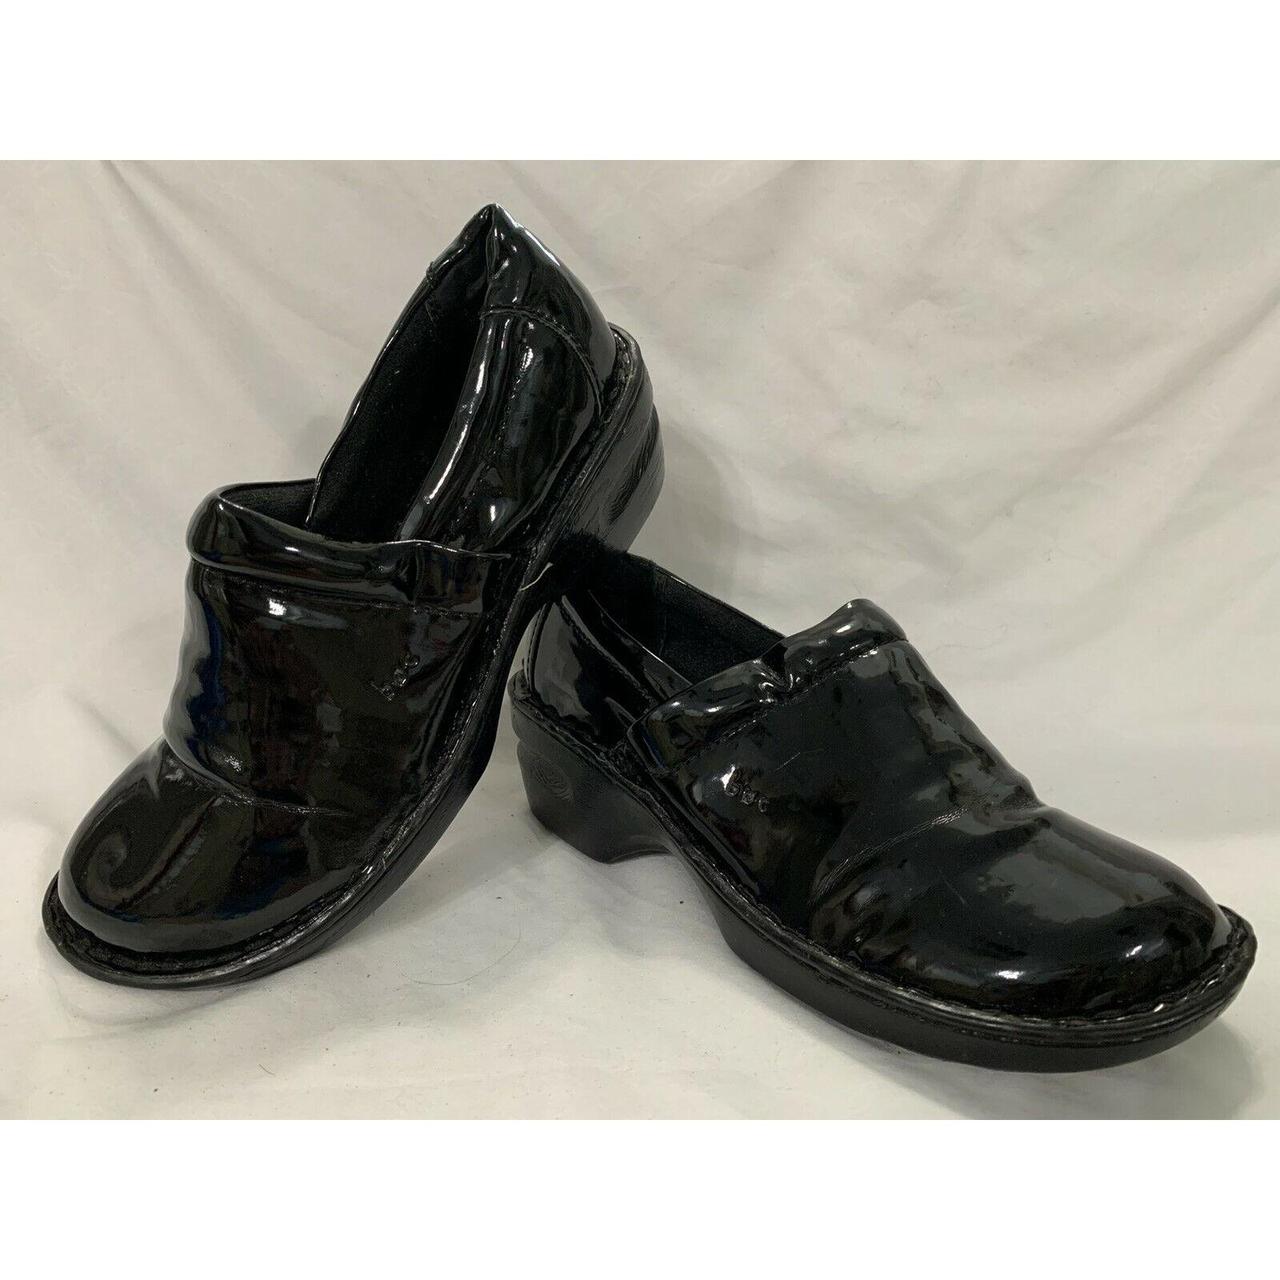 b.o.c. Black Patent Leather Clogs Shoes 